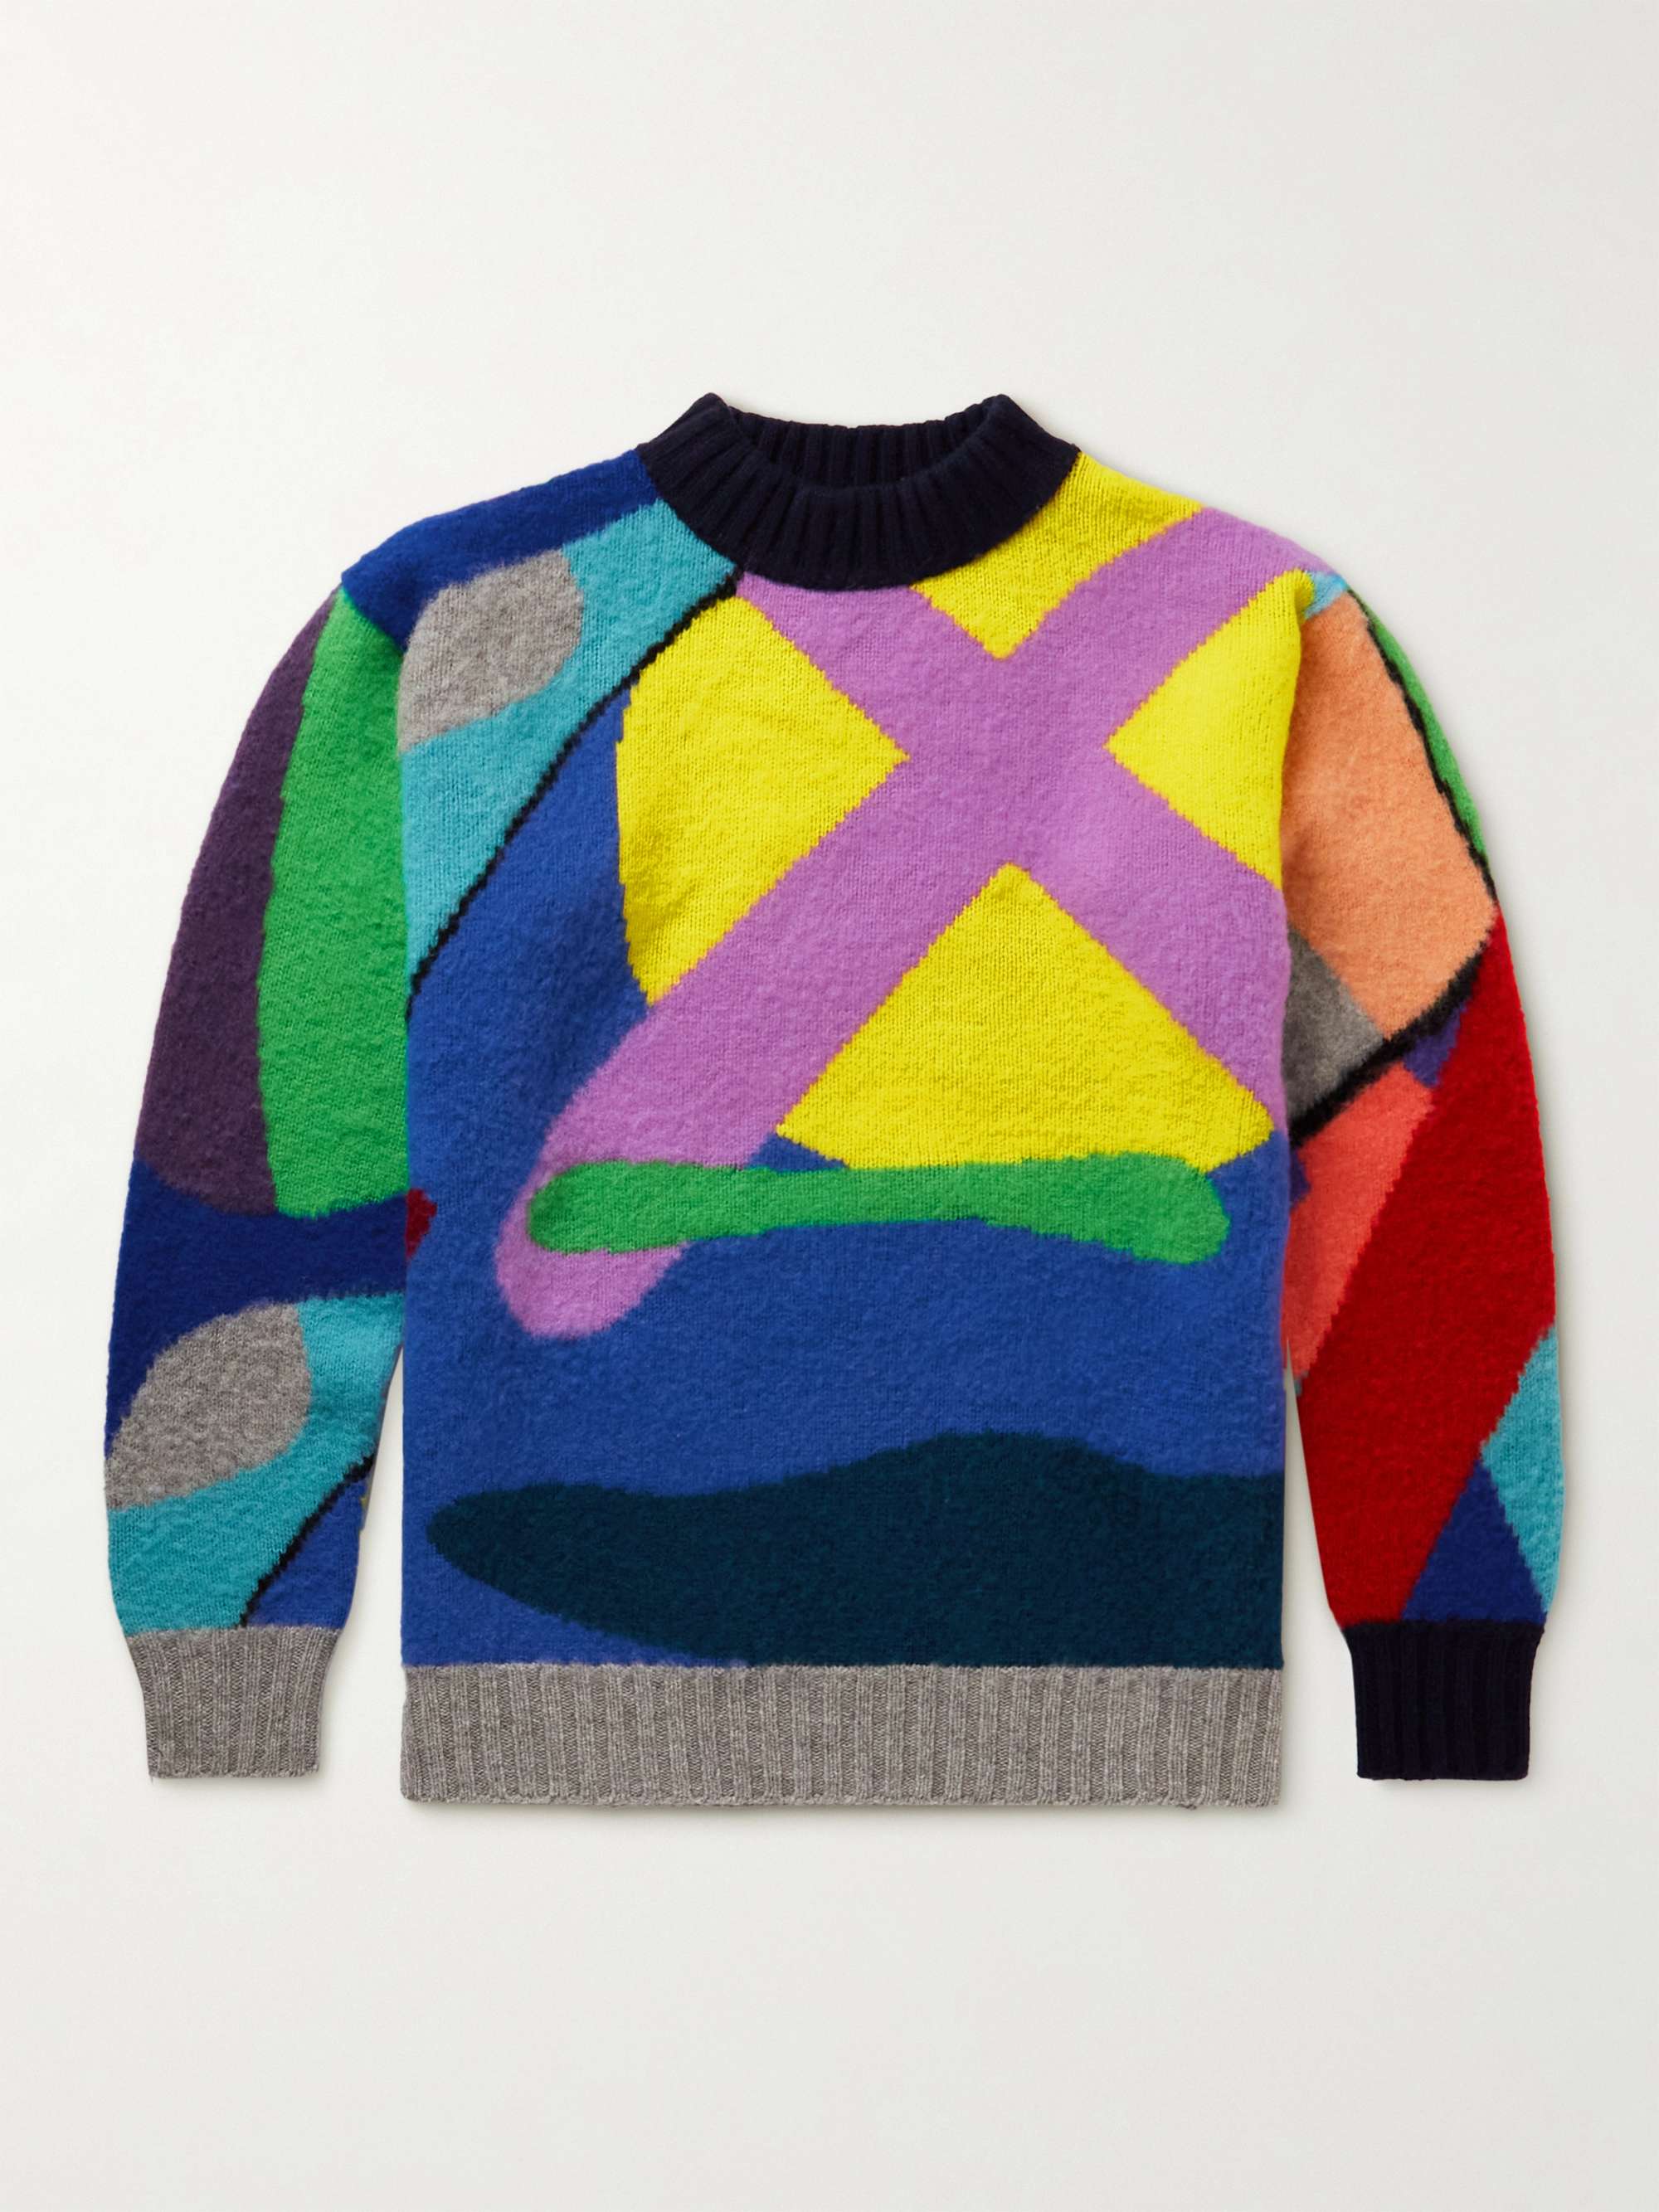 + KAWS Wool-Jacquard Sweater